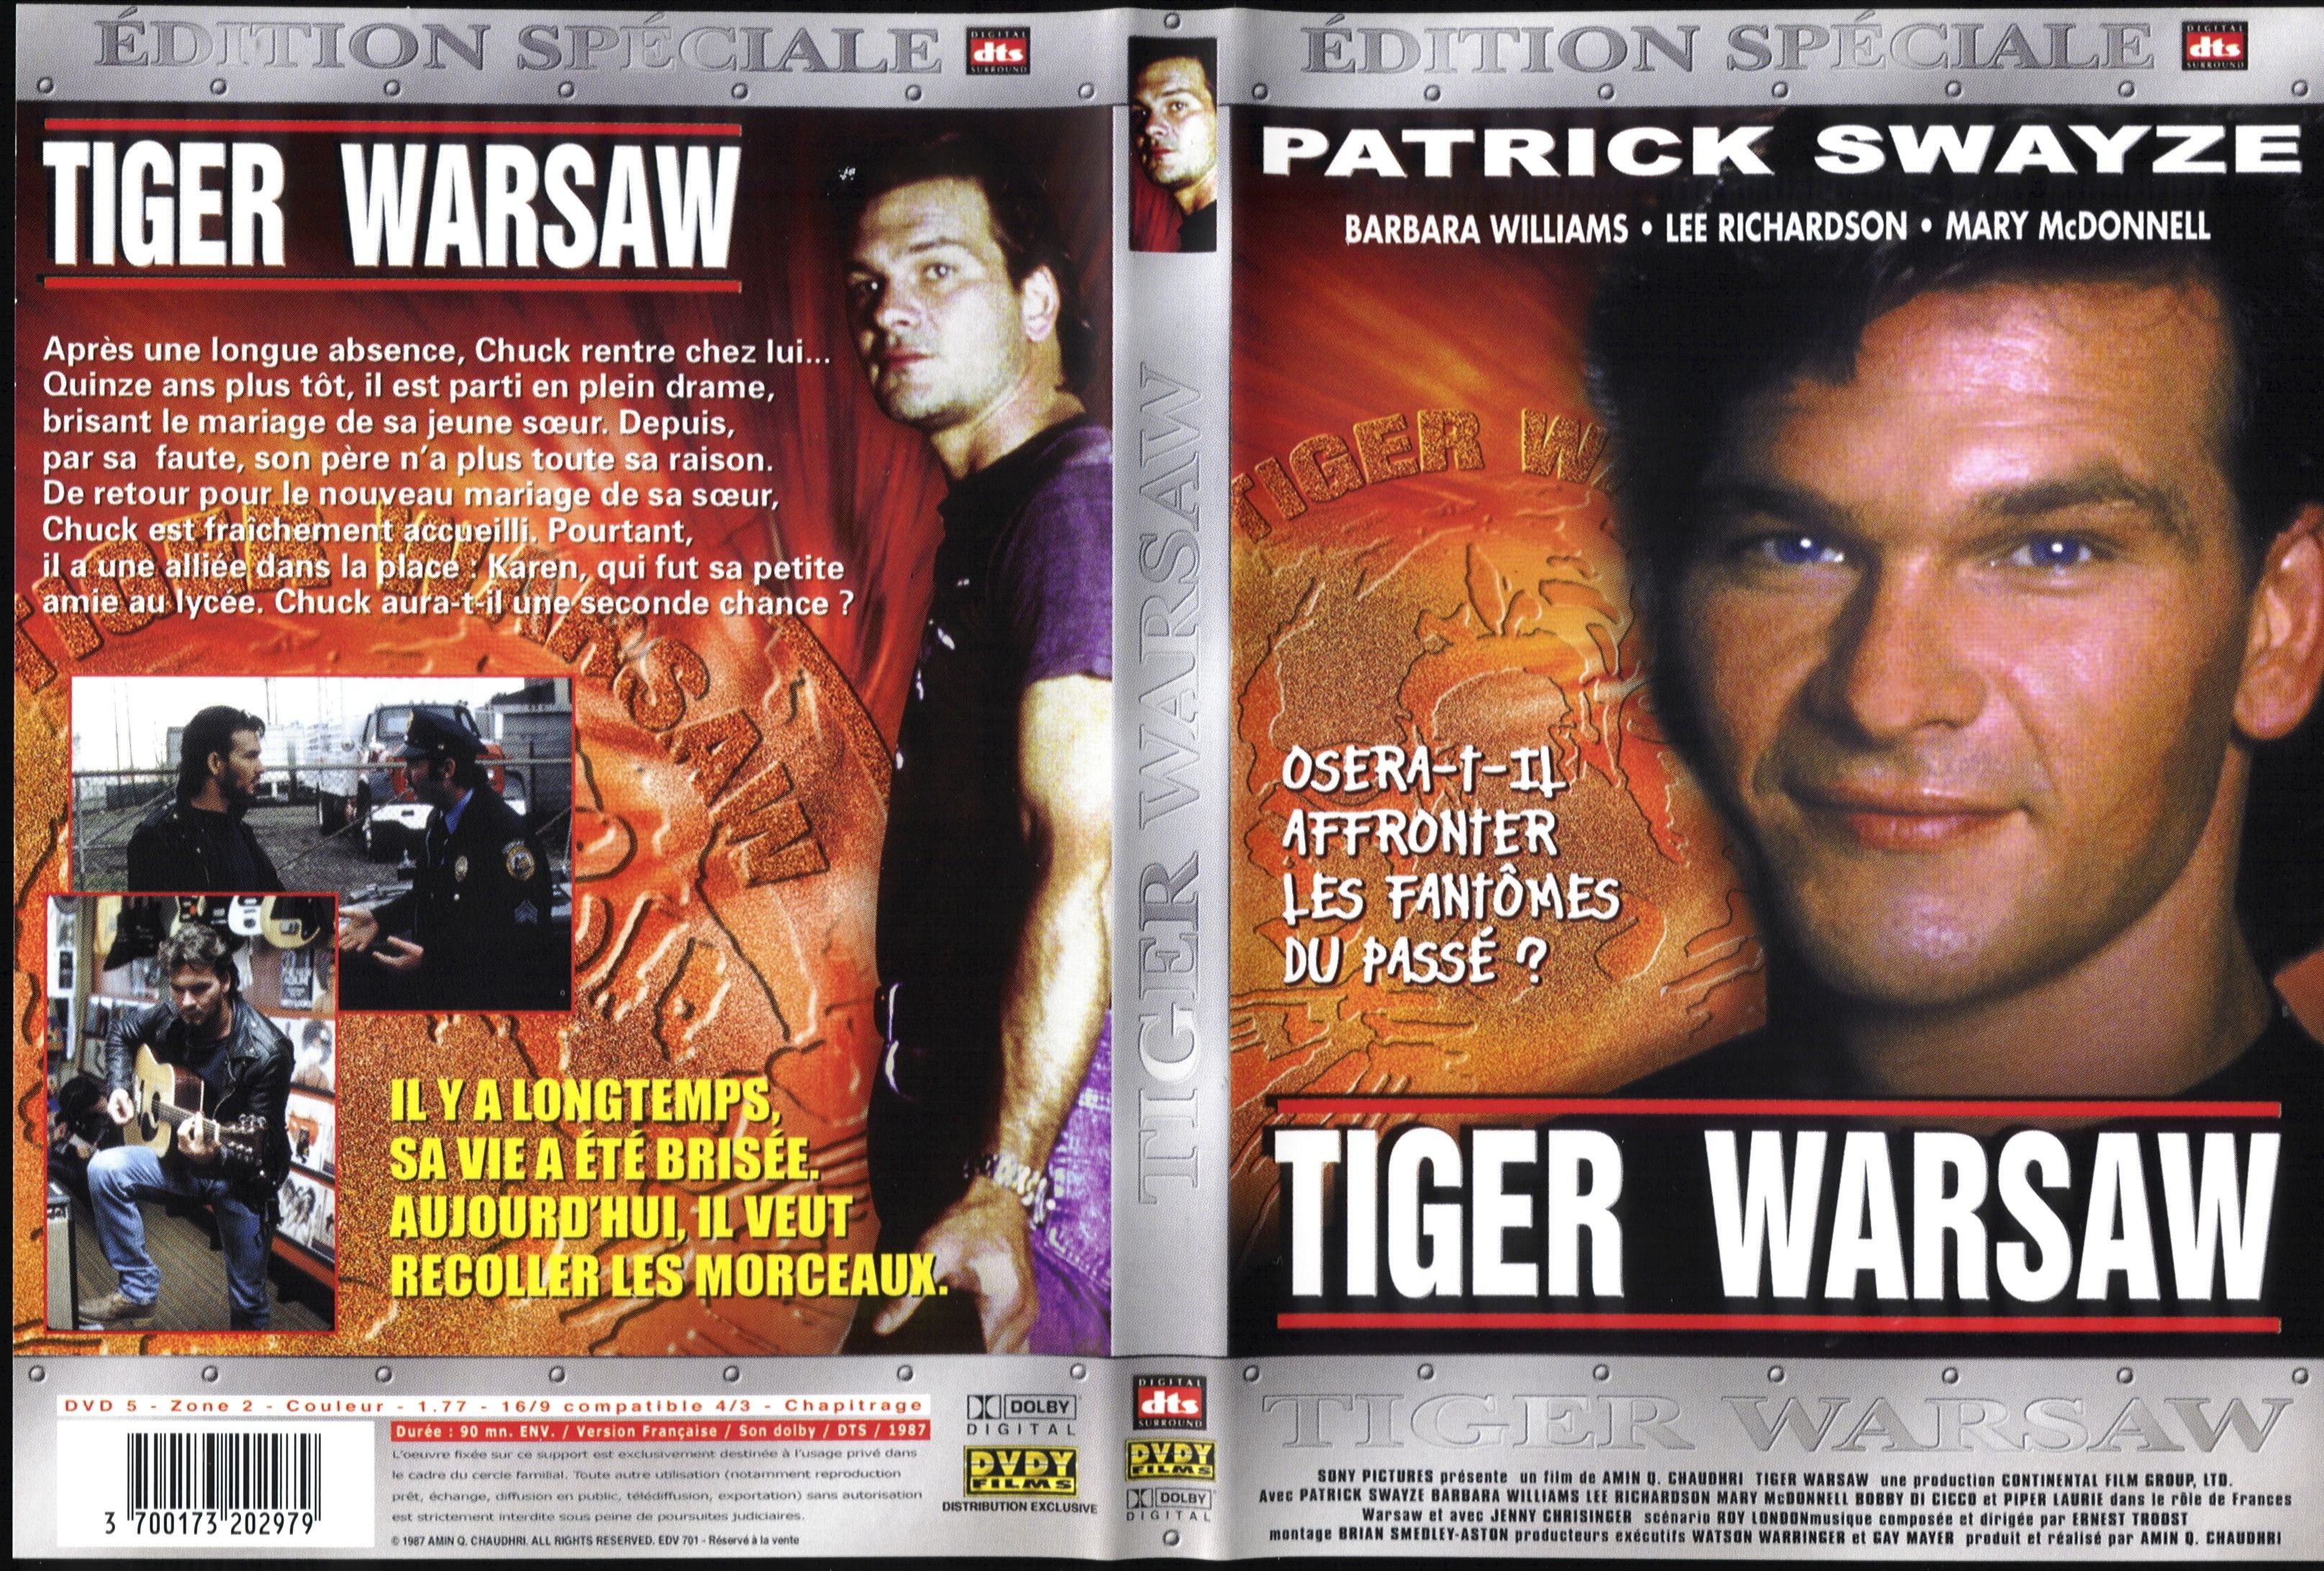 Jaquette DVD Tiger Warsaw